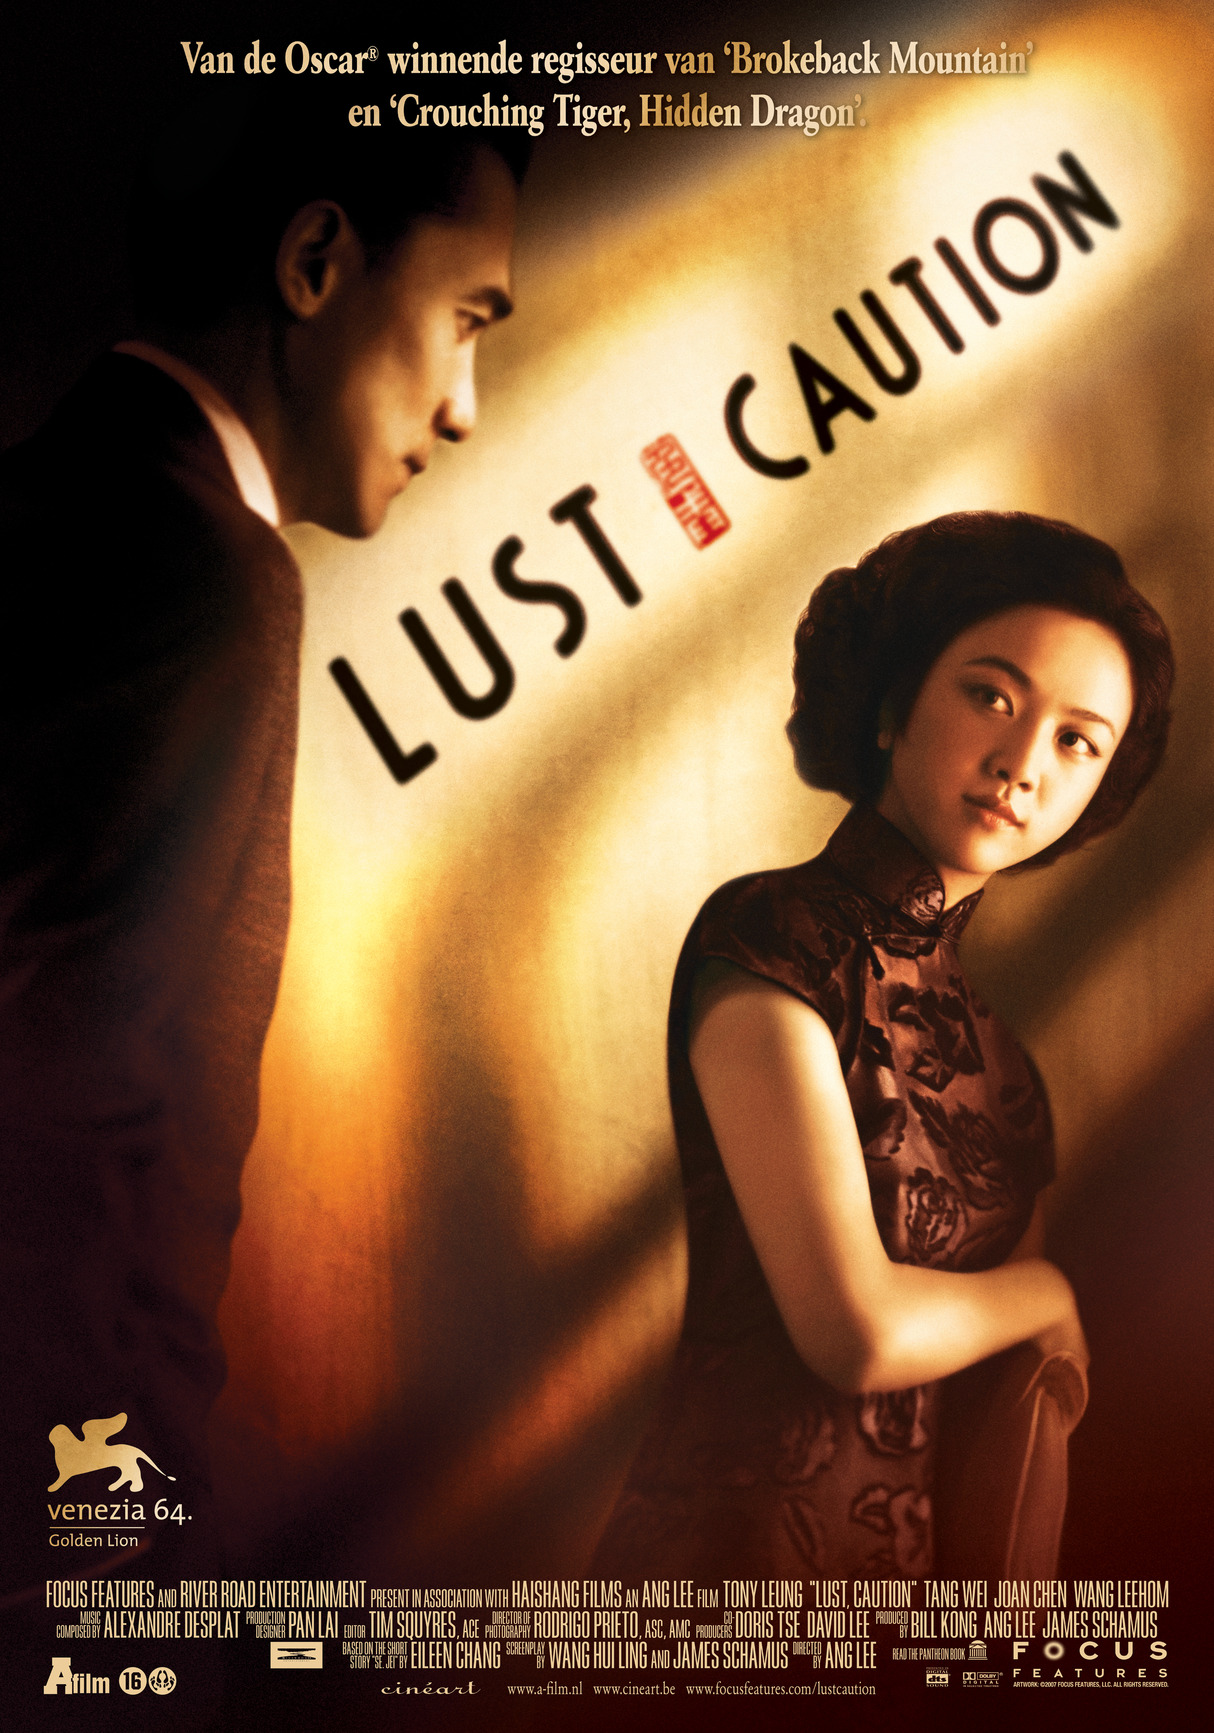 Lust, Caution #4